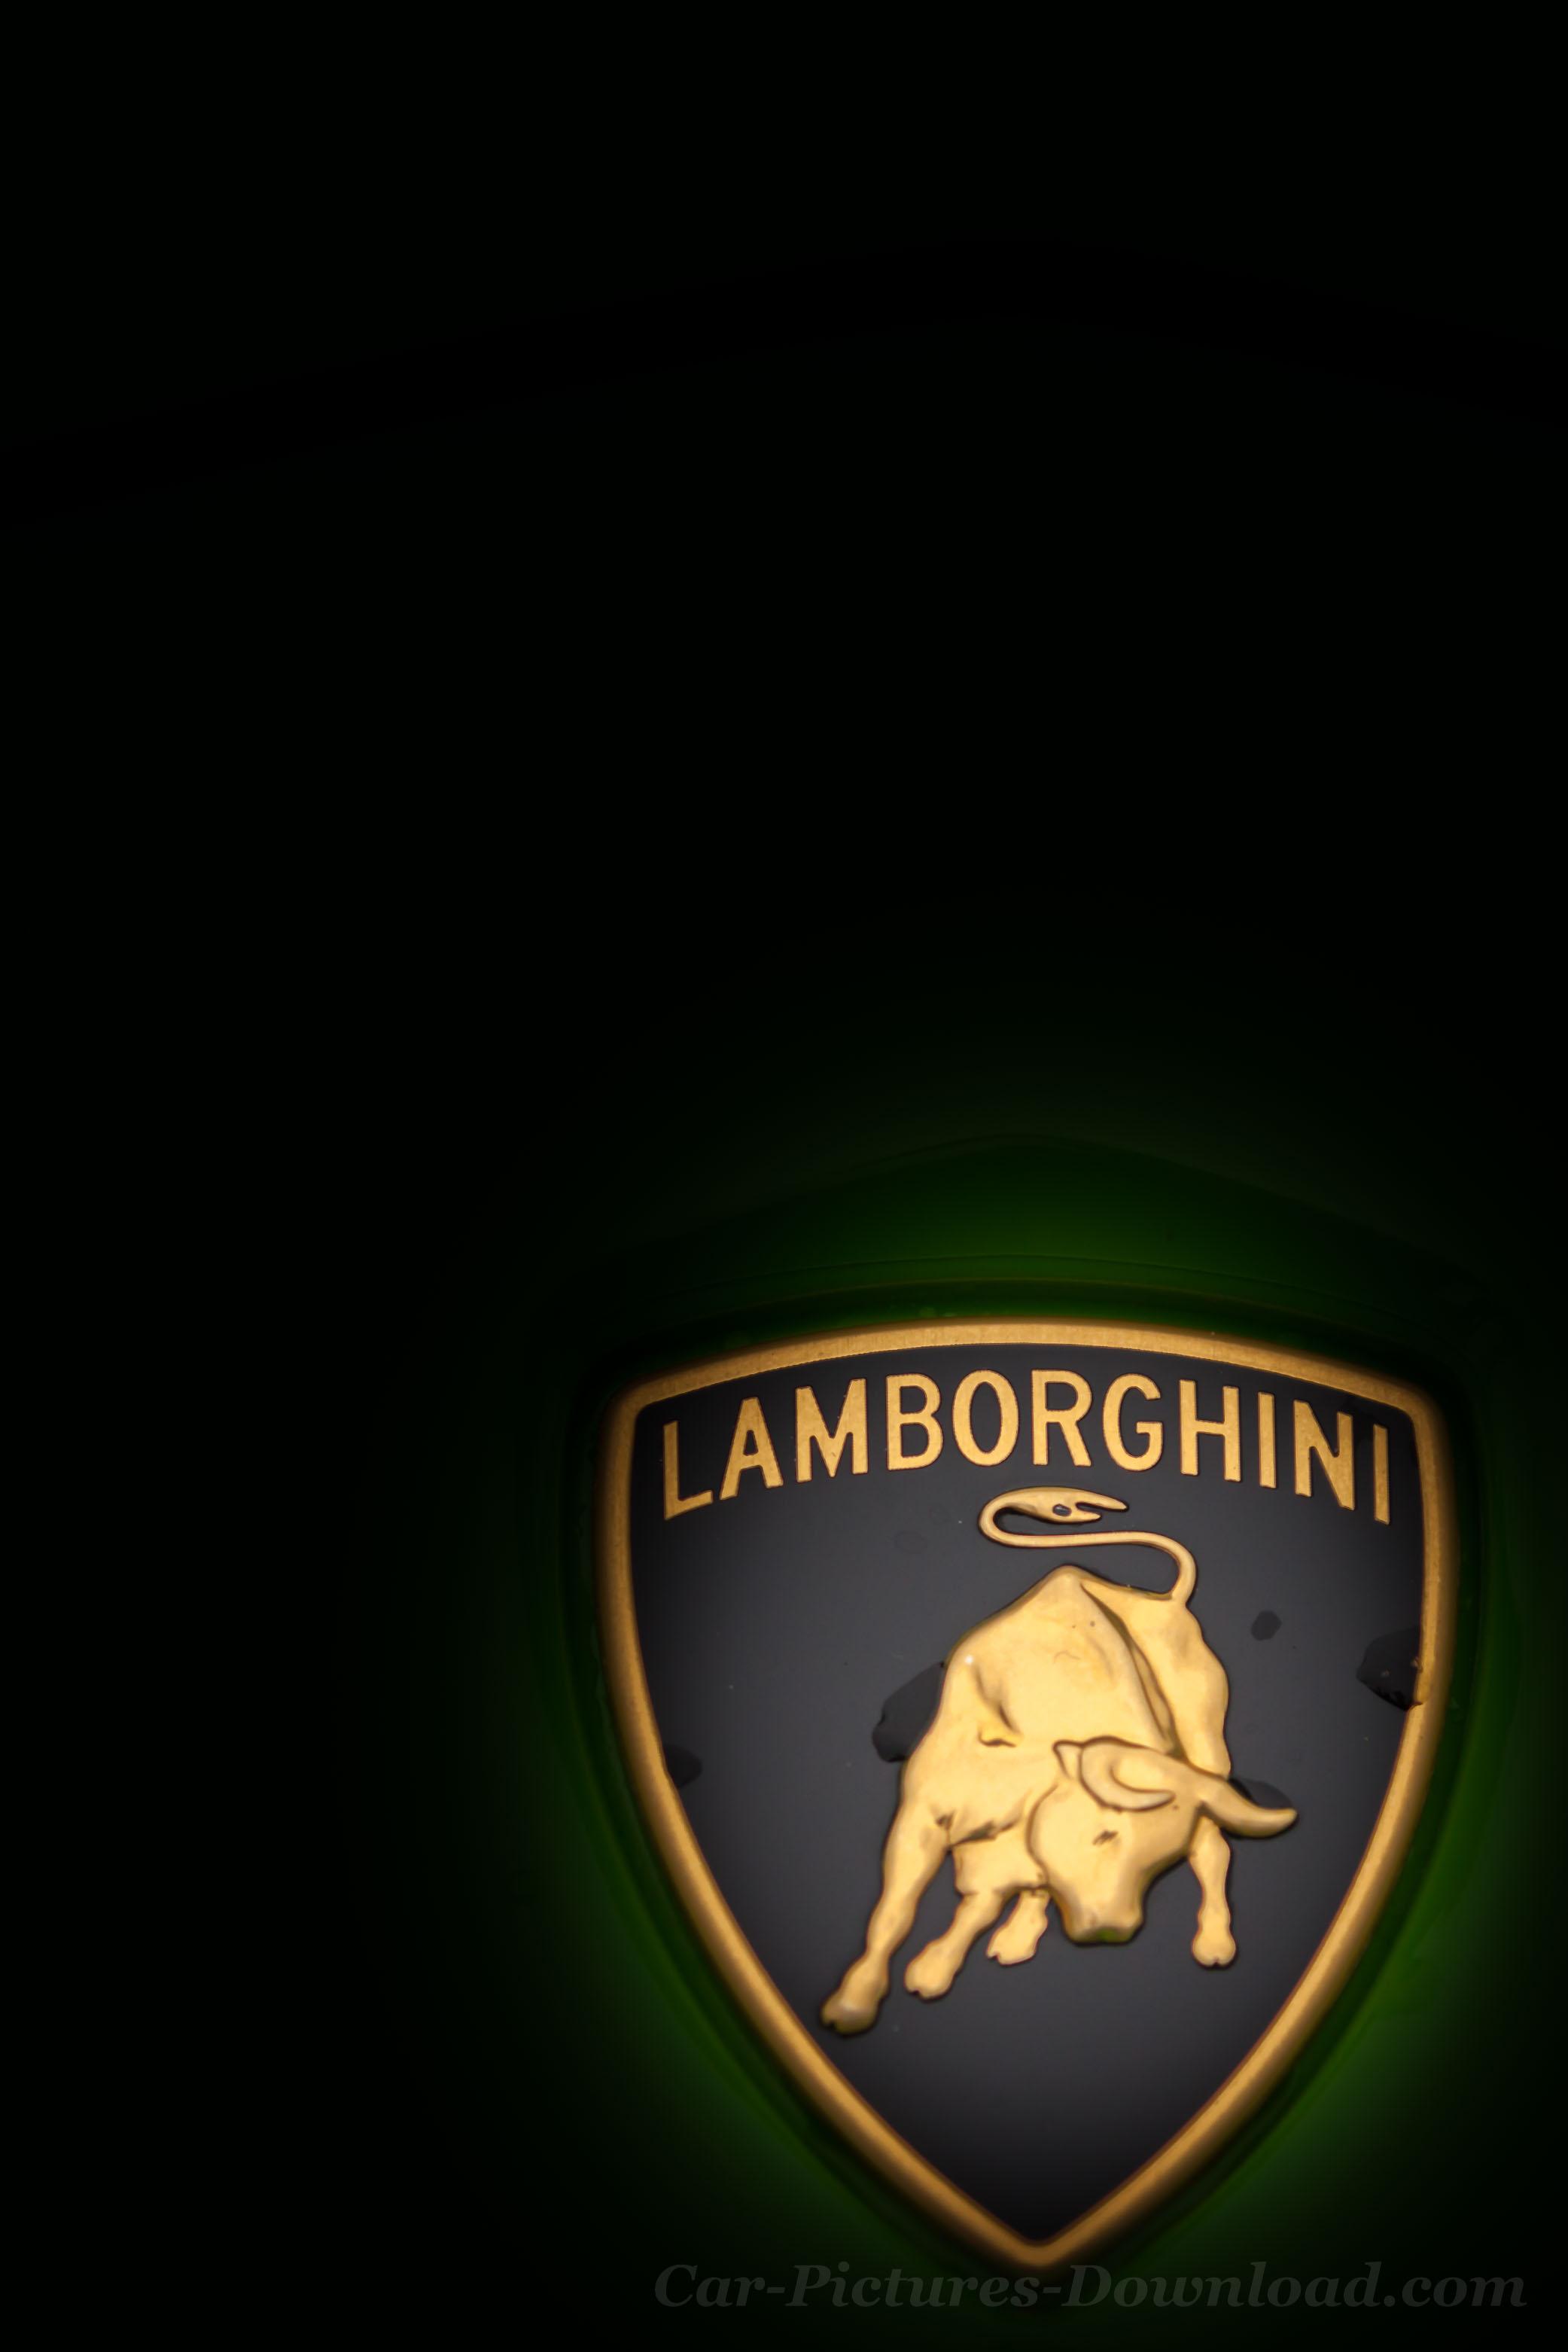 HD Lamborghini Wallpaper For iPhone And Mobile Phone Free Download